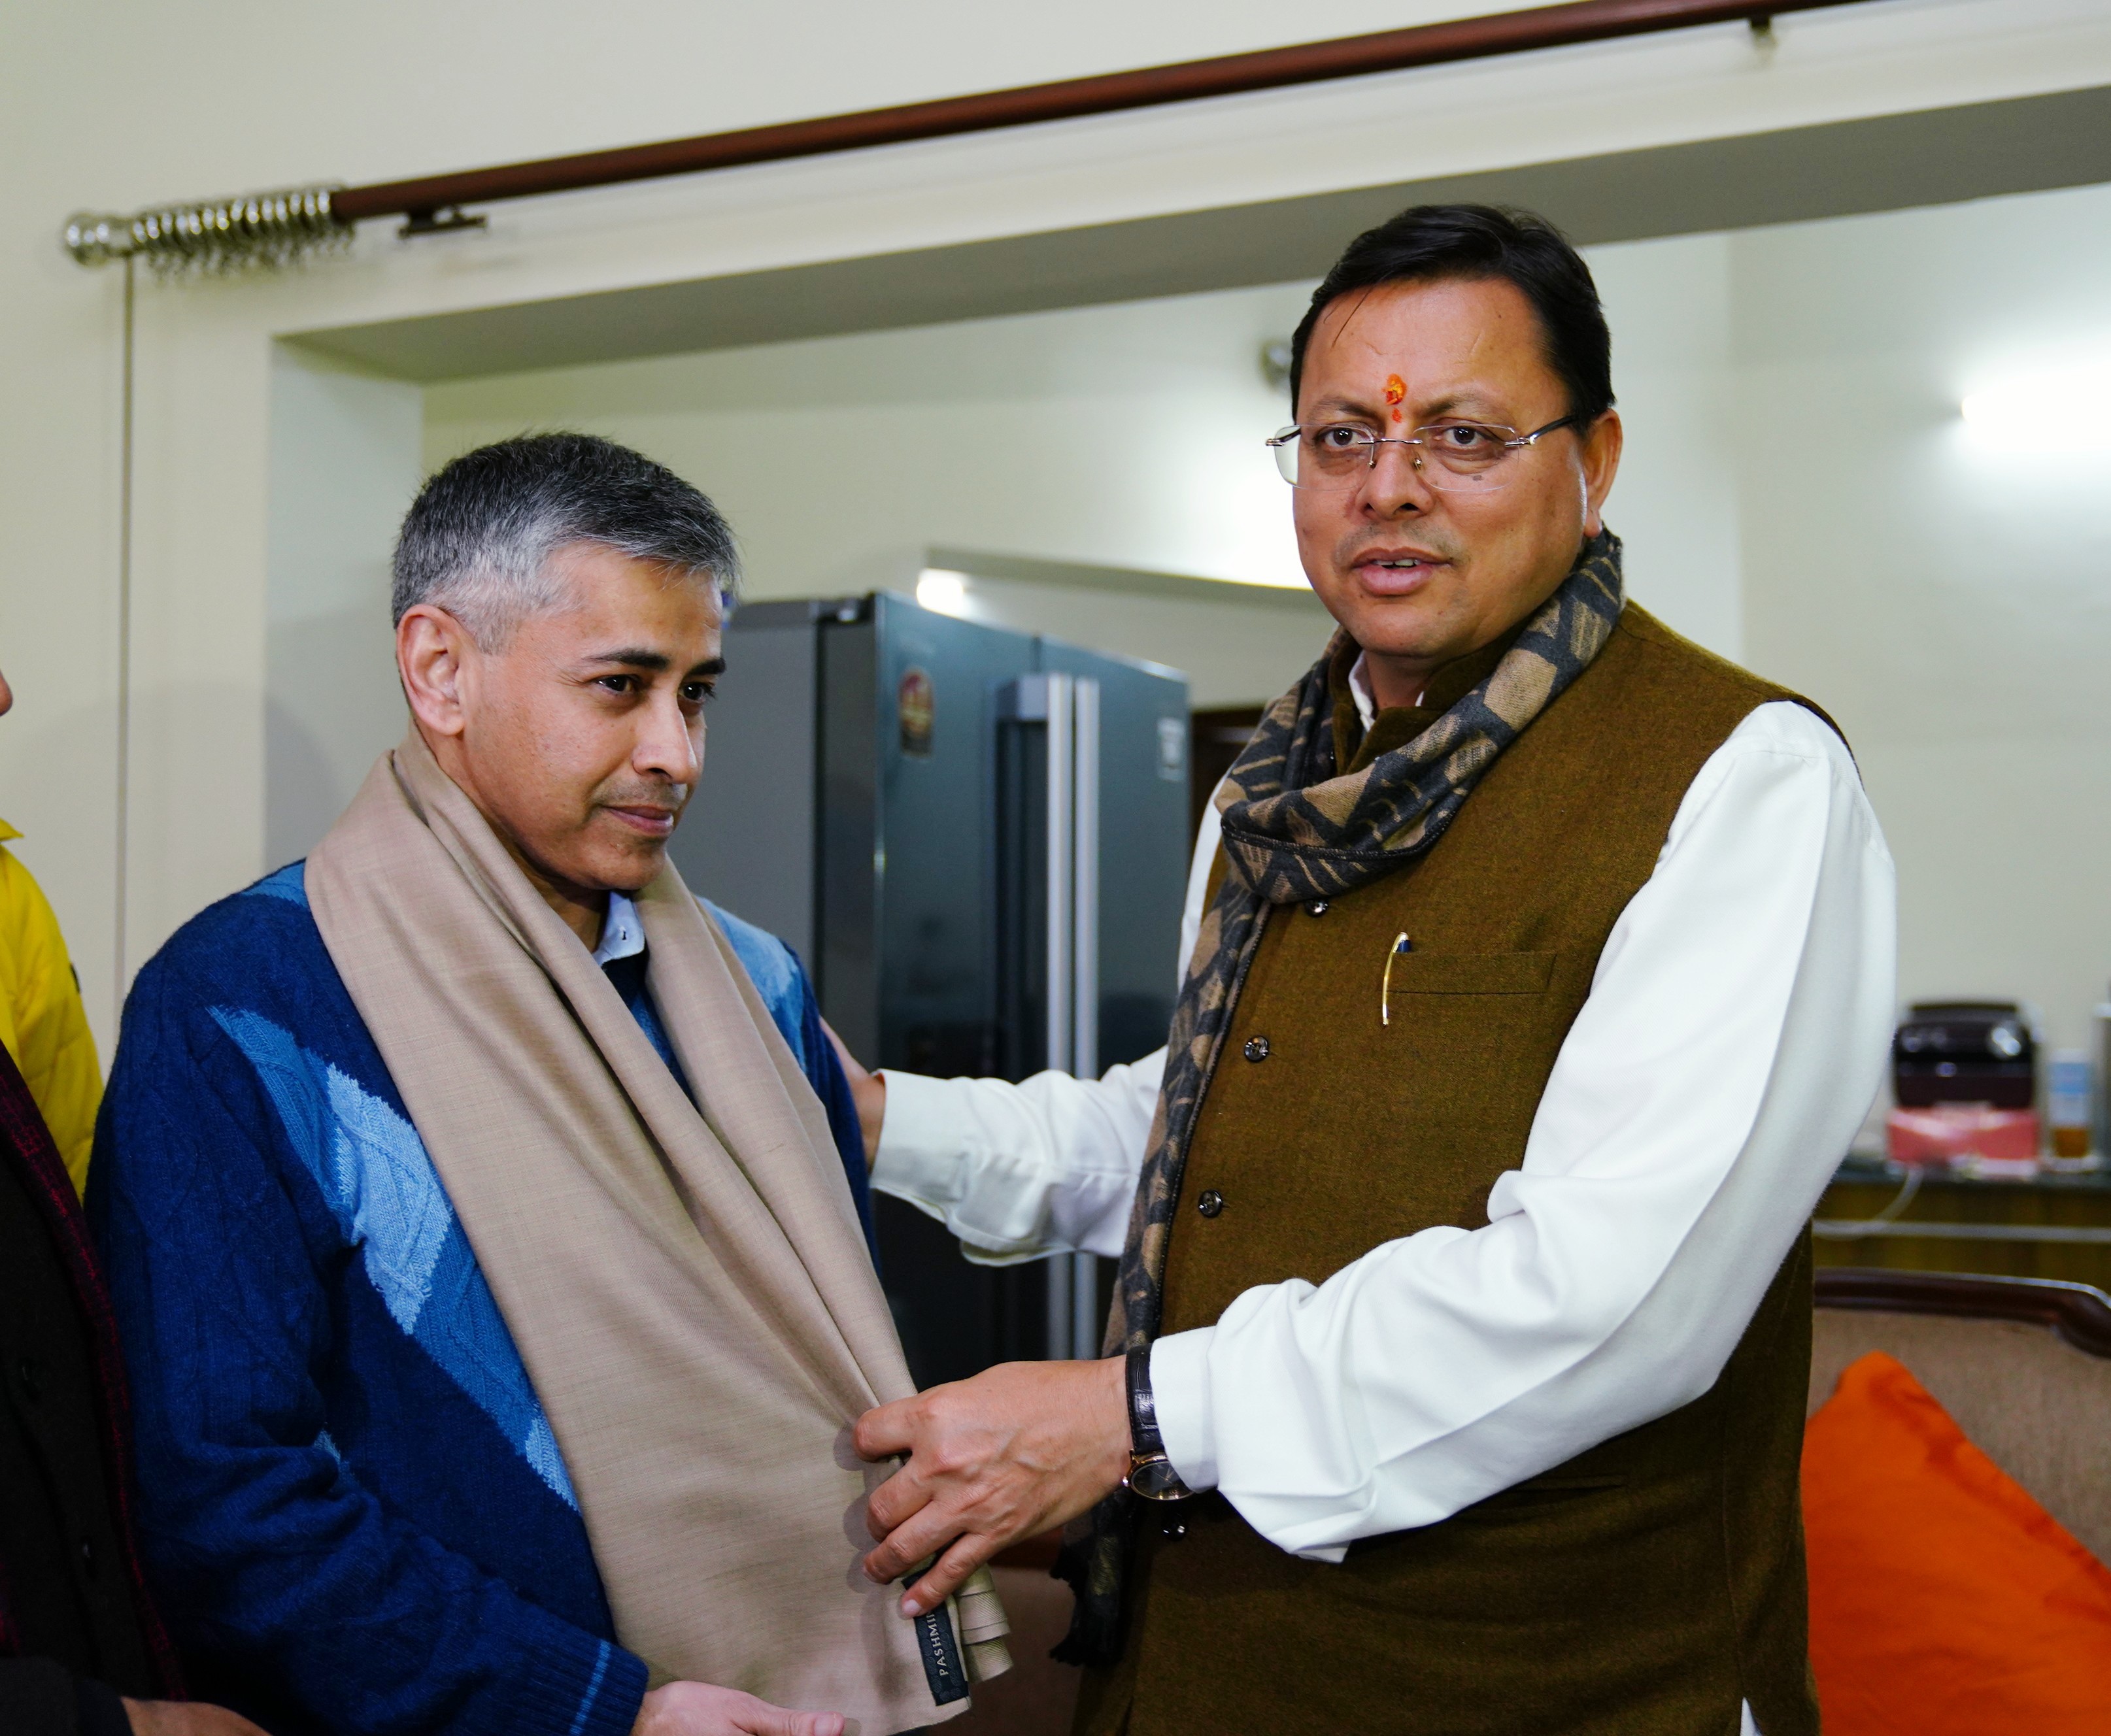 CM Dhami met Saurabh Vashisht